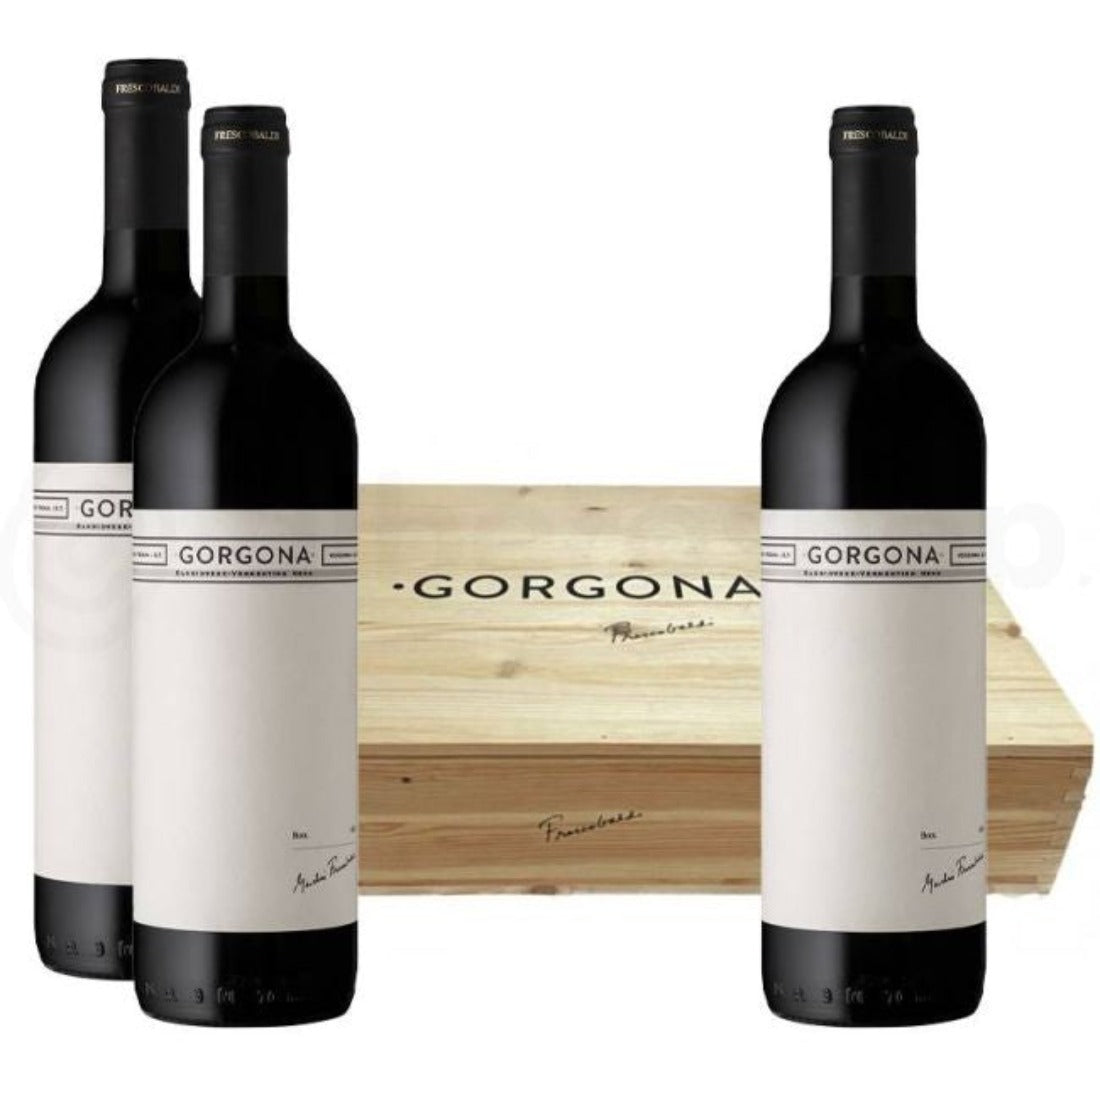 Frescobaldi Costa Toscana Gorgona 2021 Igt Rosso 6 bottiglie - Frescobaldi